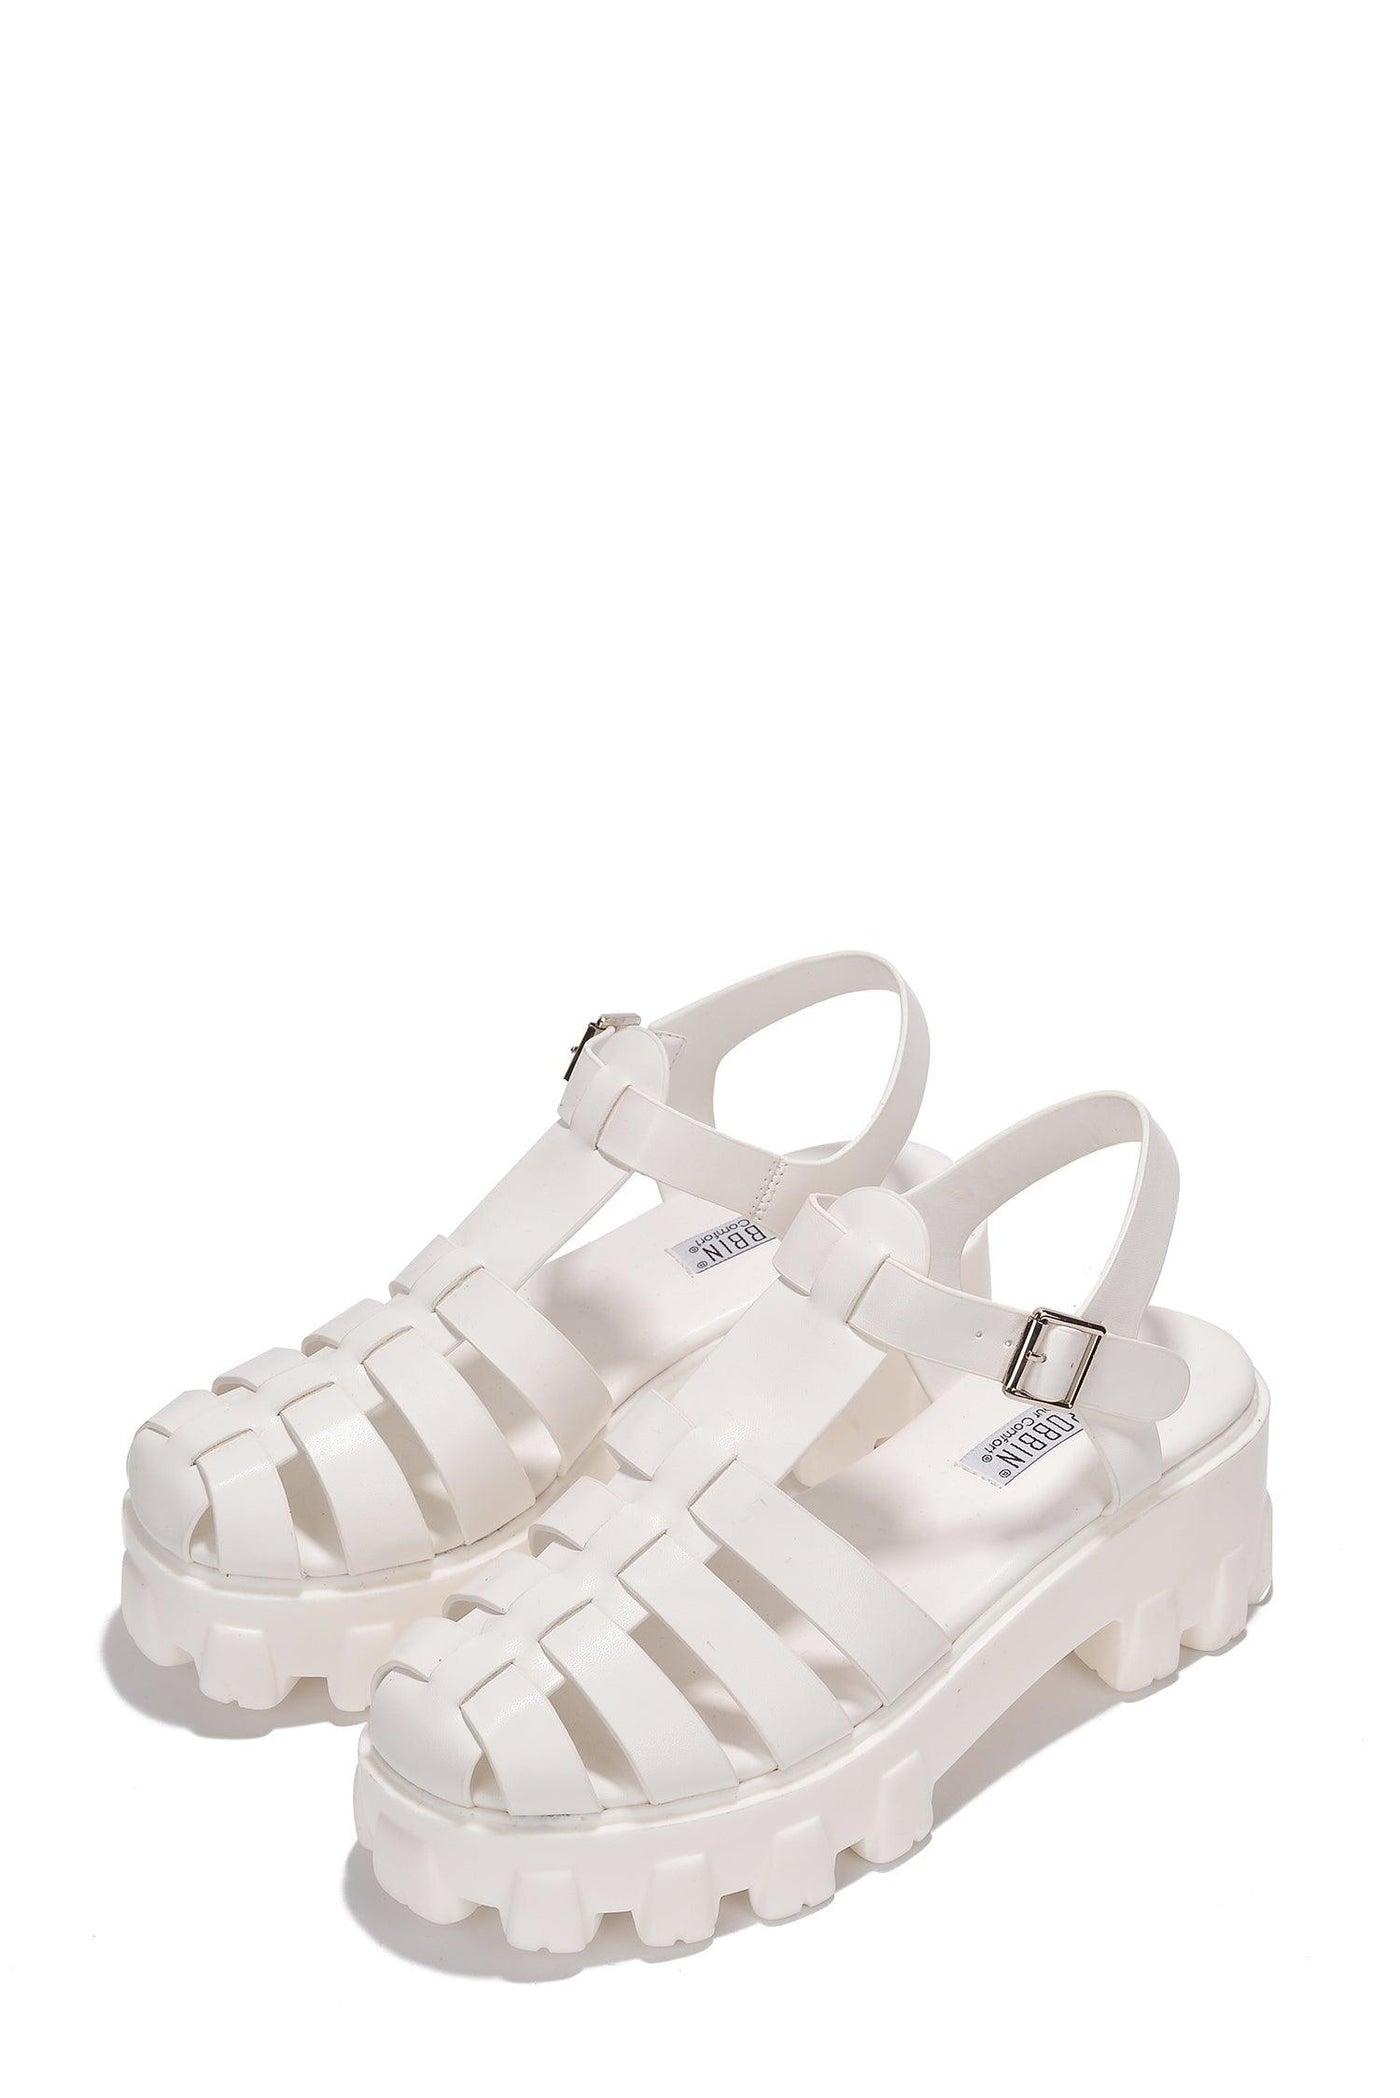 KERI - WHITE - AMIClubwear